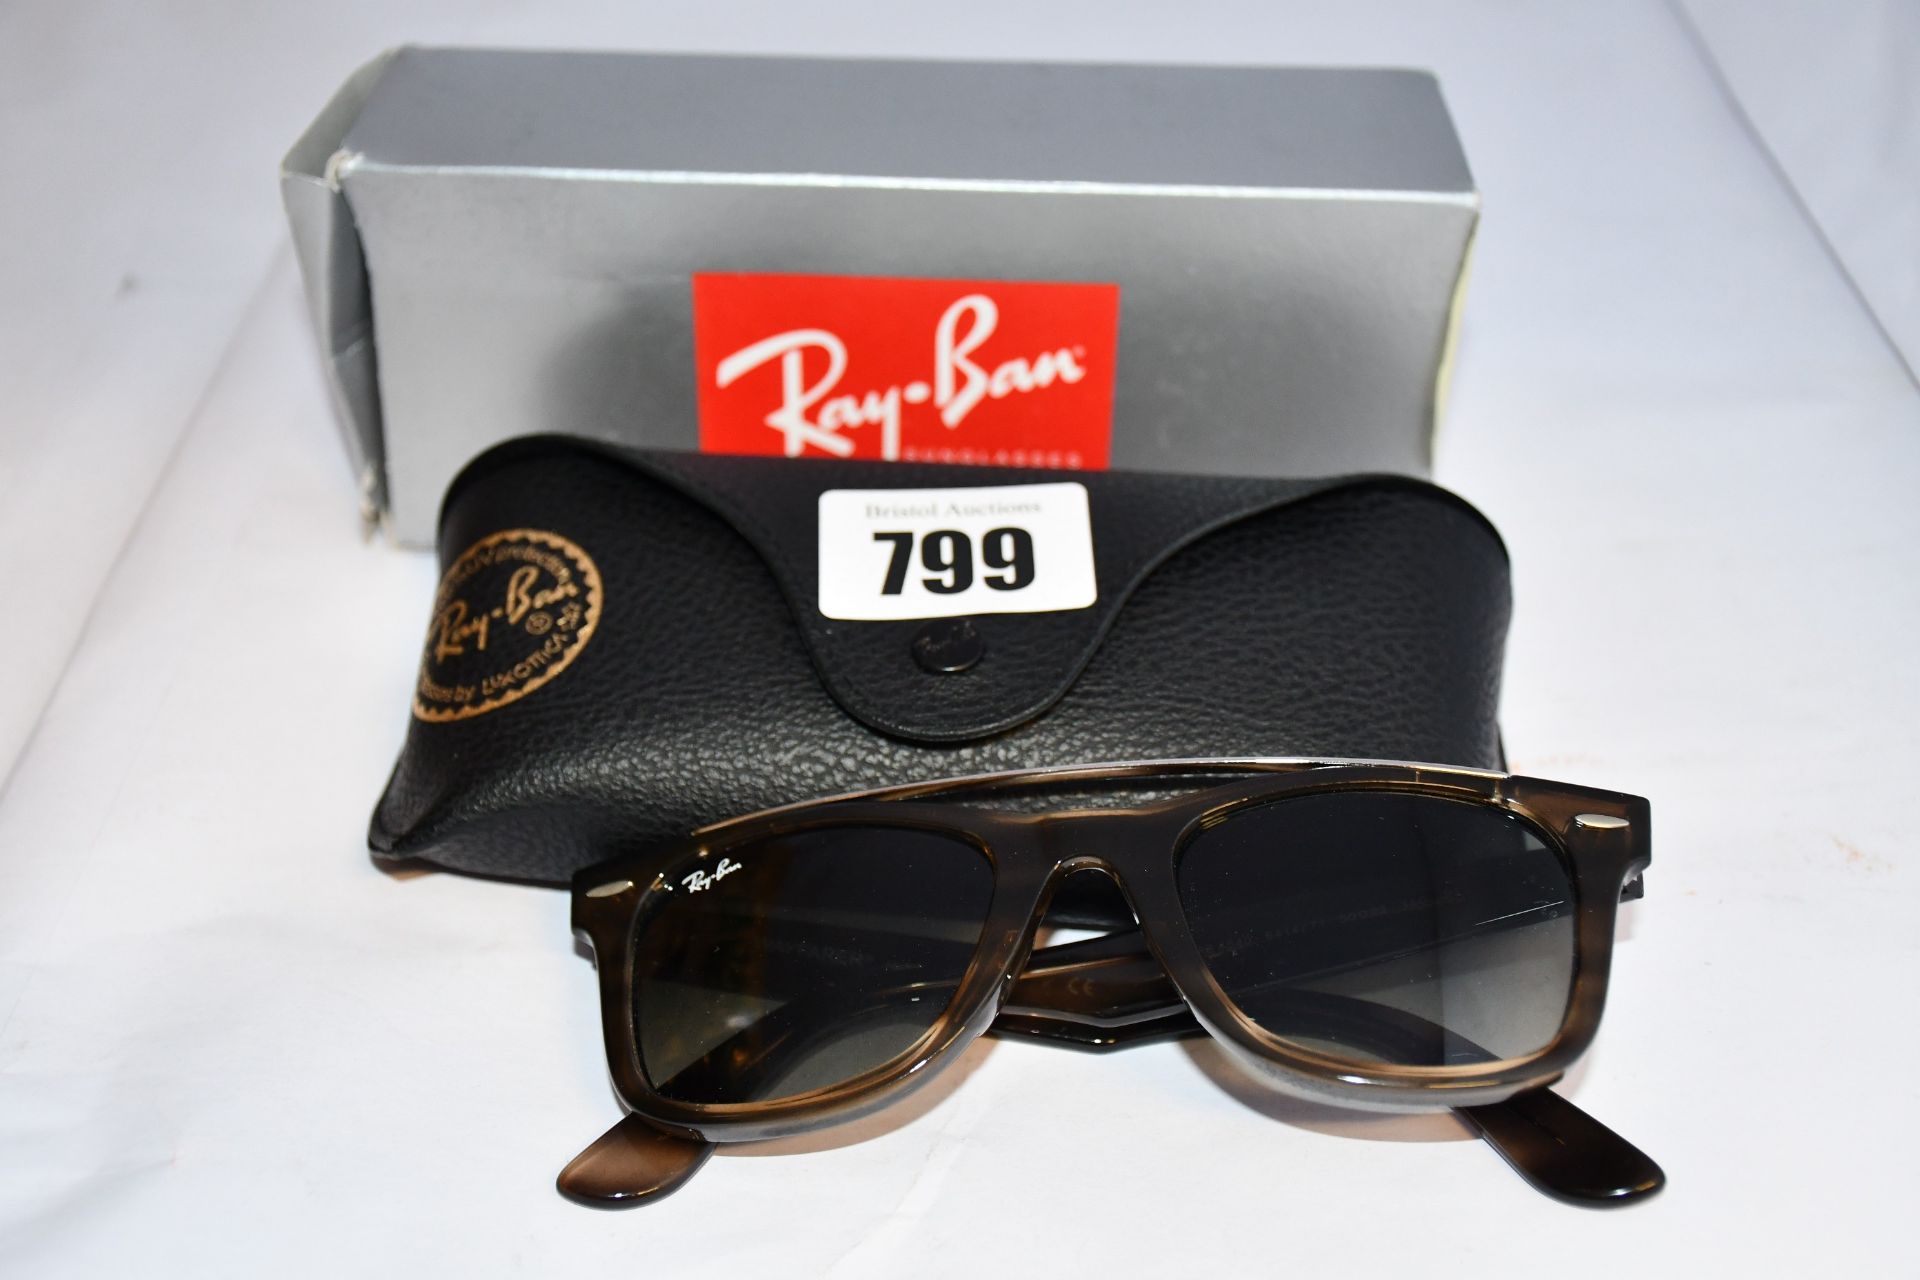 A pair of as new Ray Ban Wayfarer sunglasses.